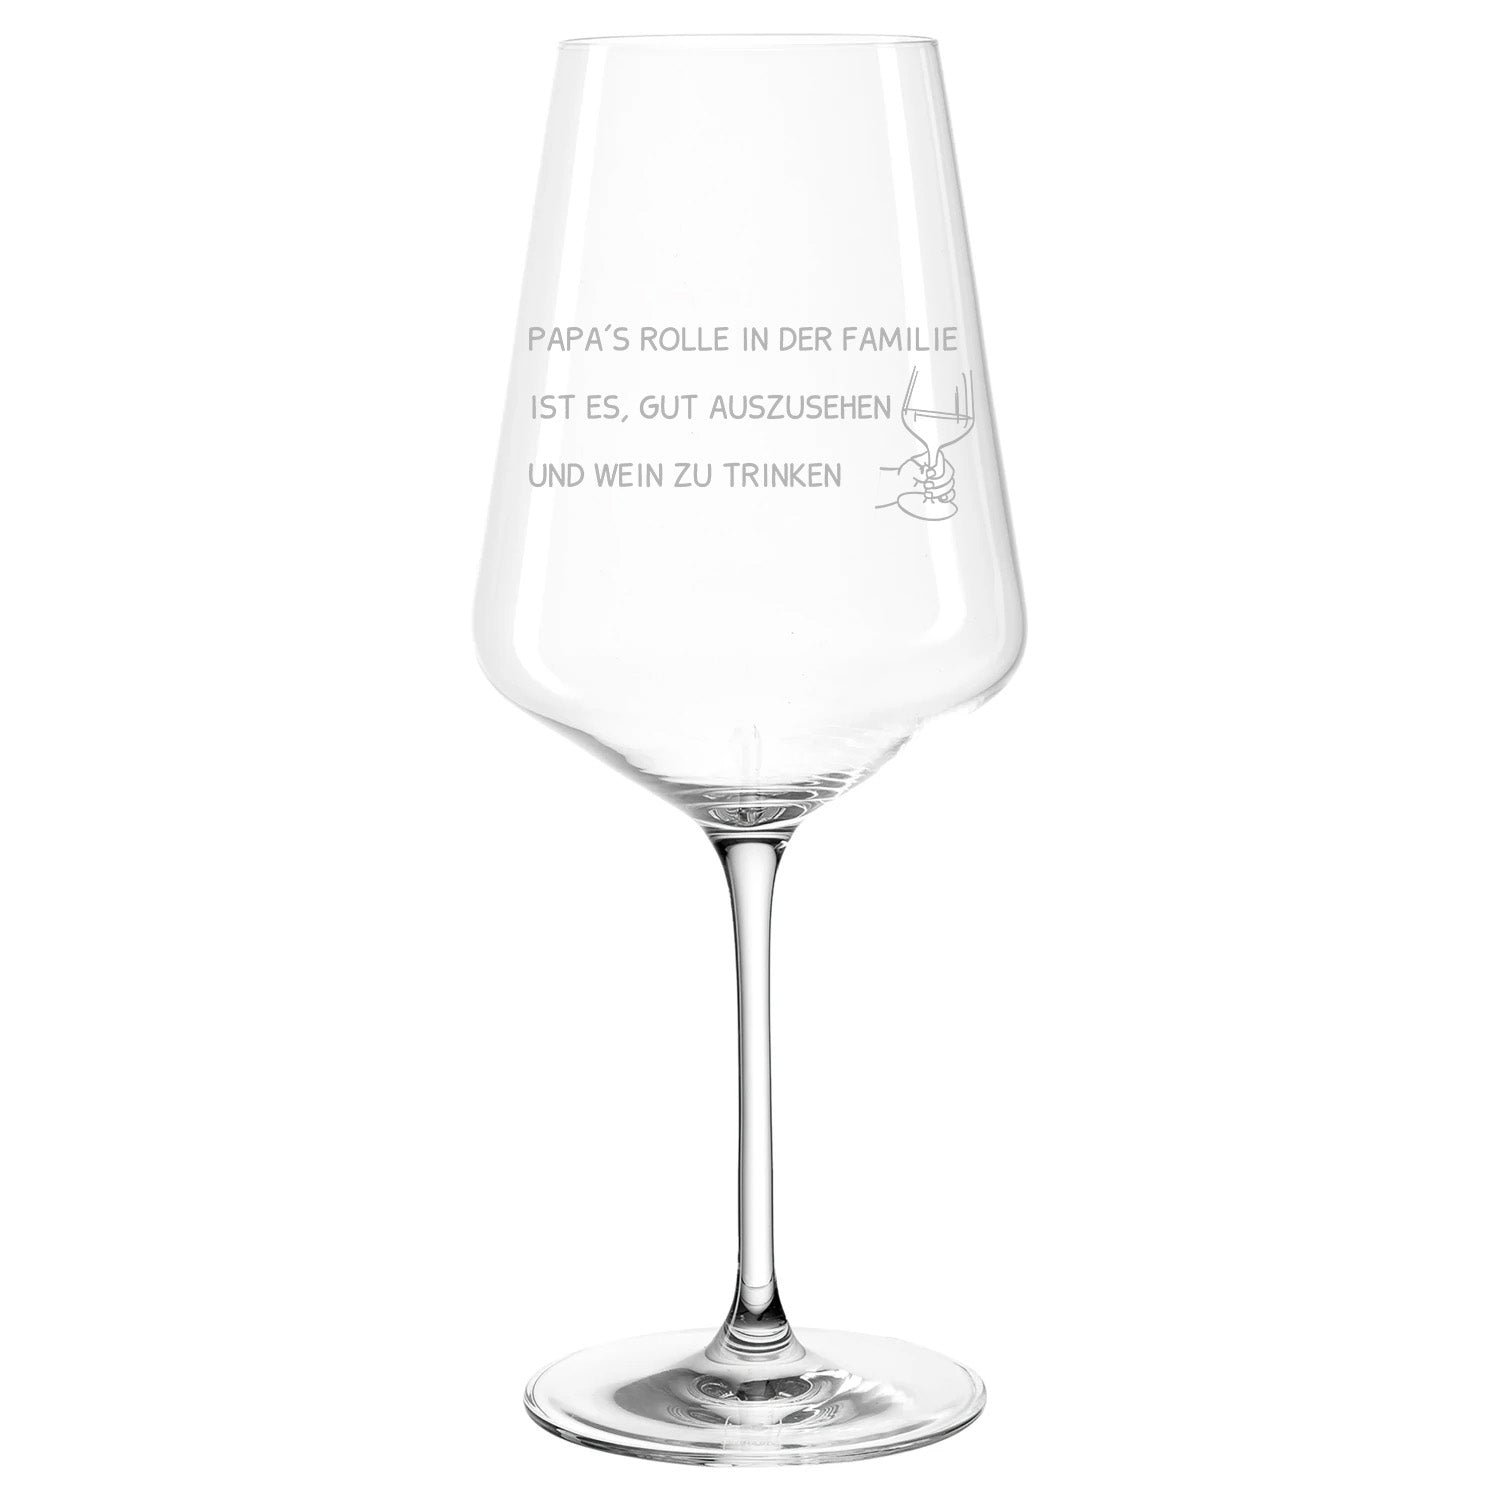 PAPA'S ROLLE - Premium Weinglas